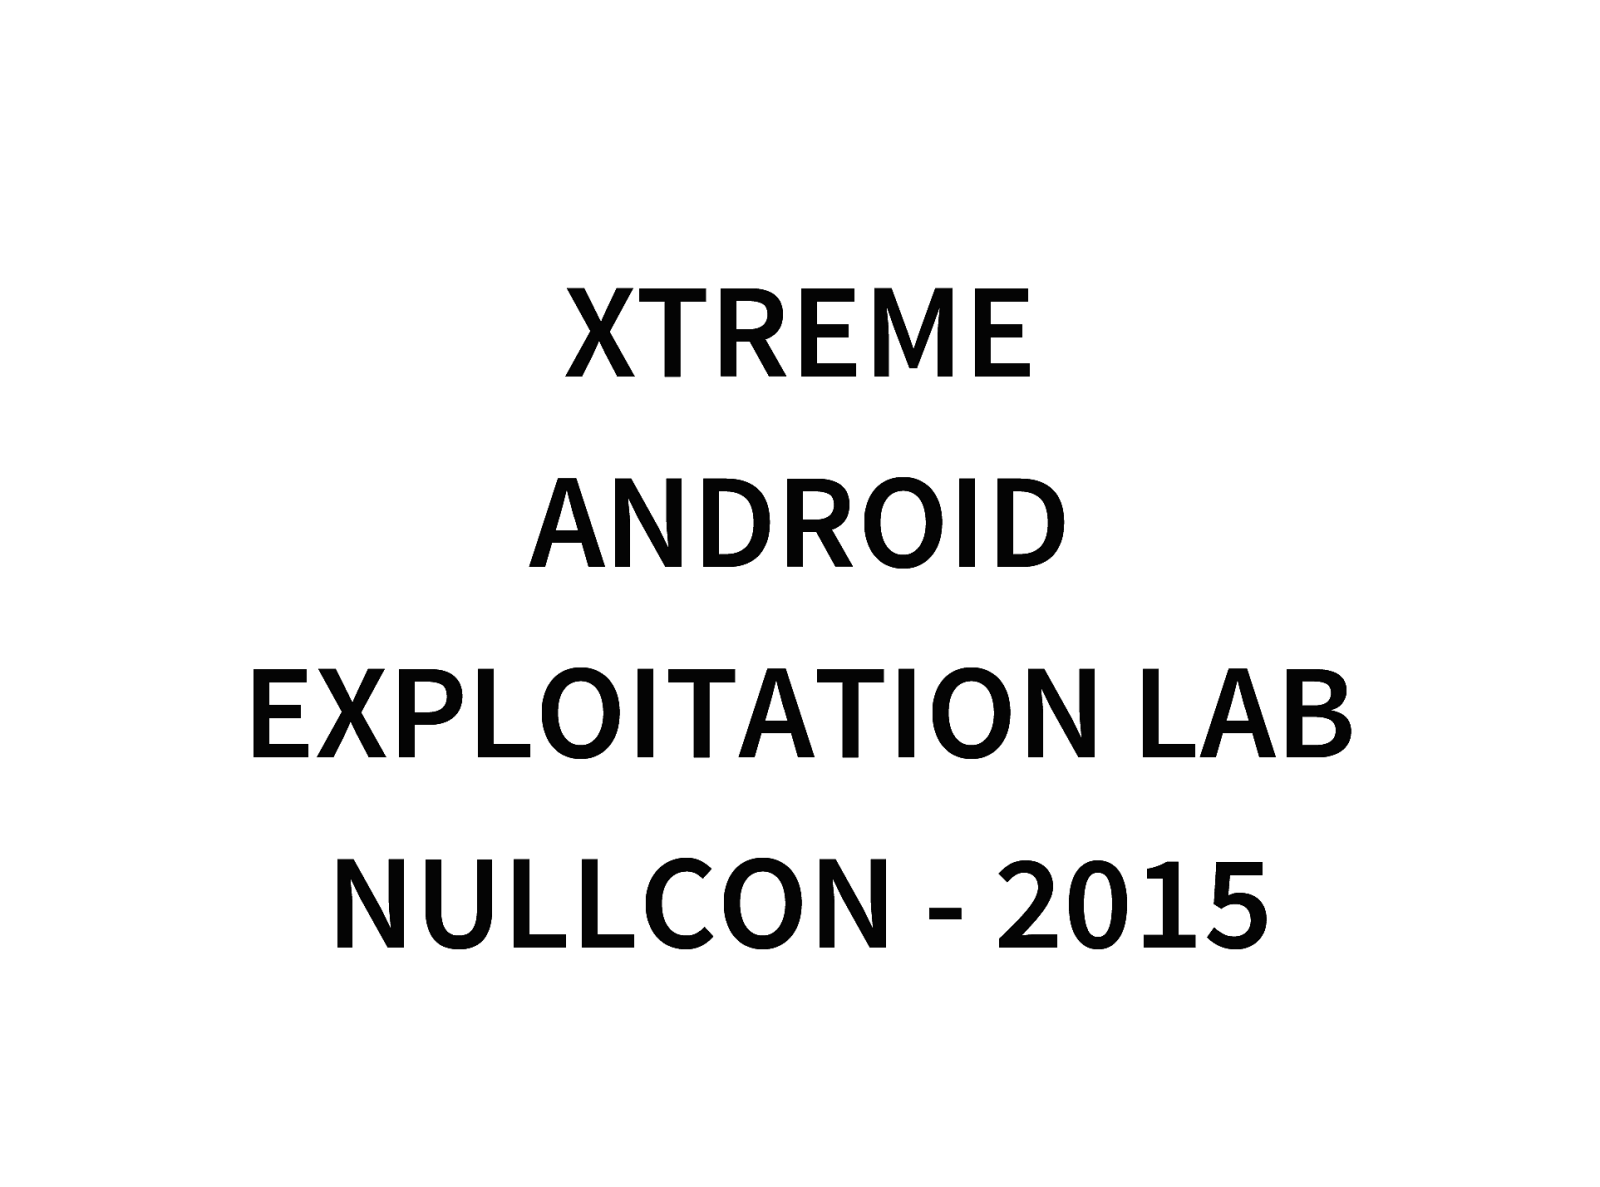 Xtreme Android Exploitation Lab